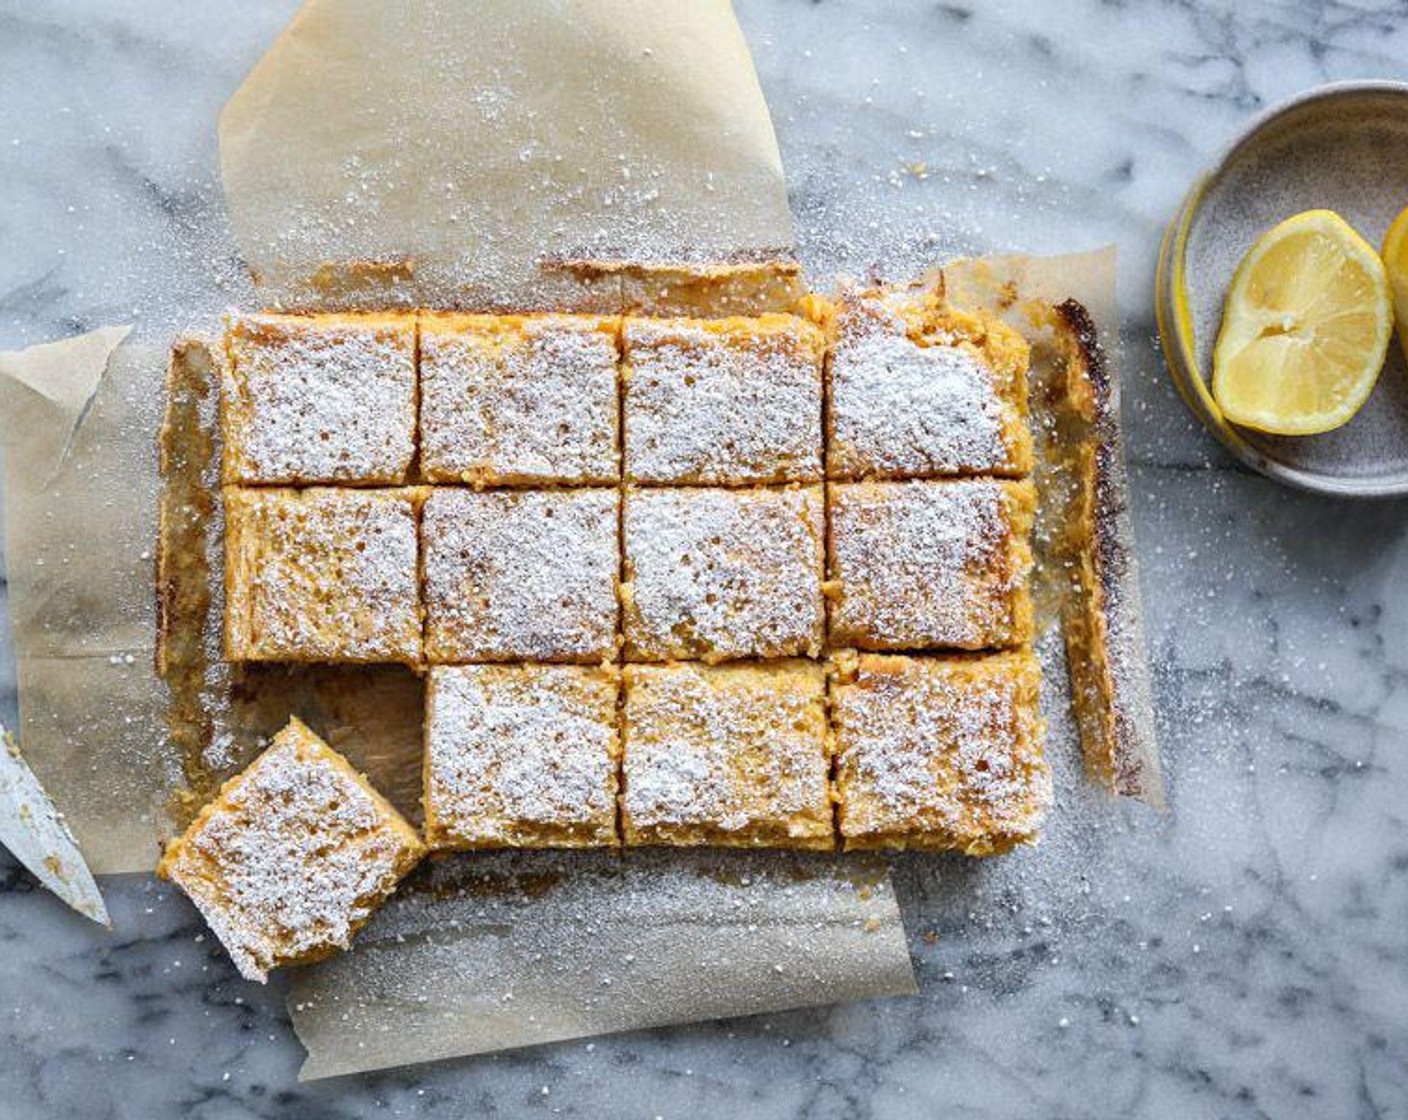 Paleo Lemon Bars with Almond Flour Crust